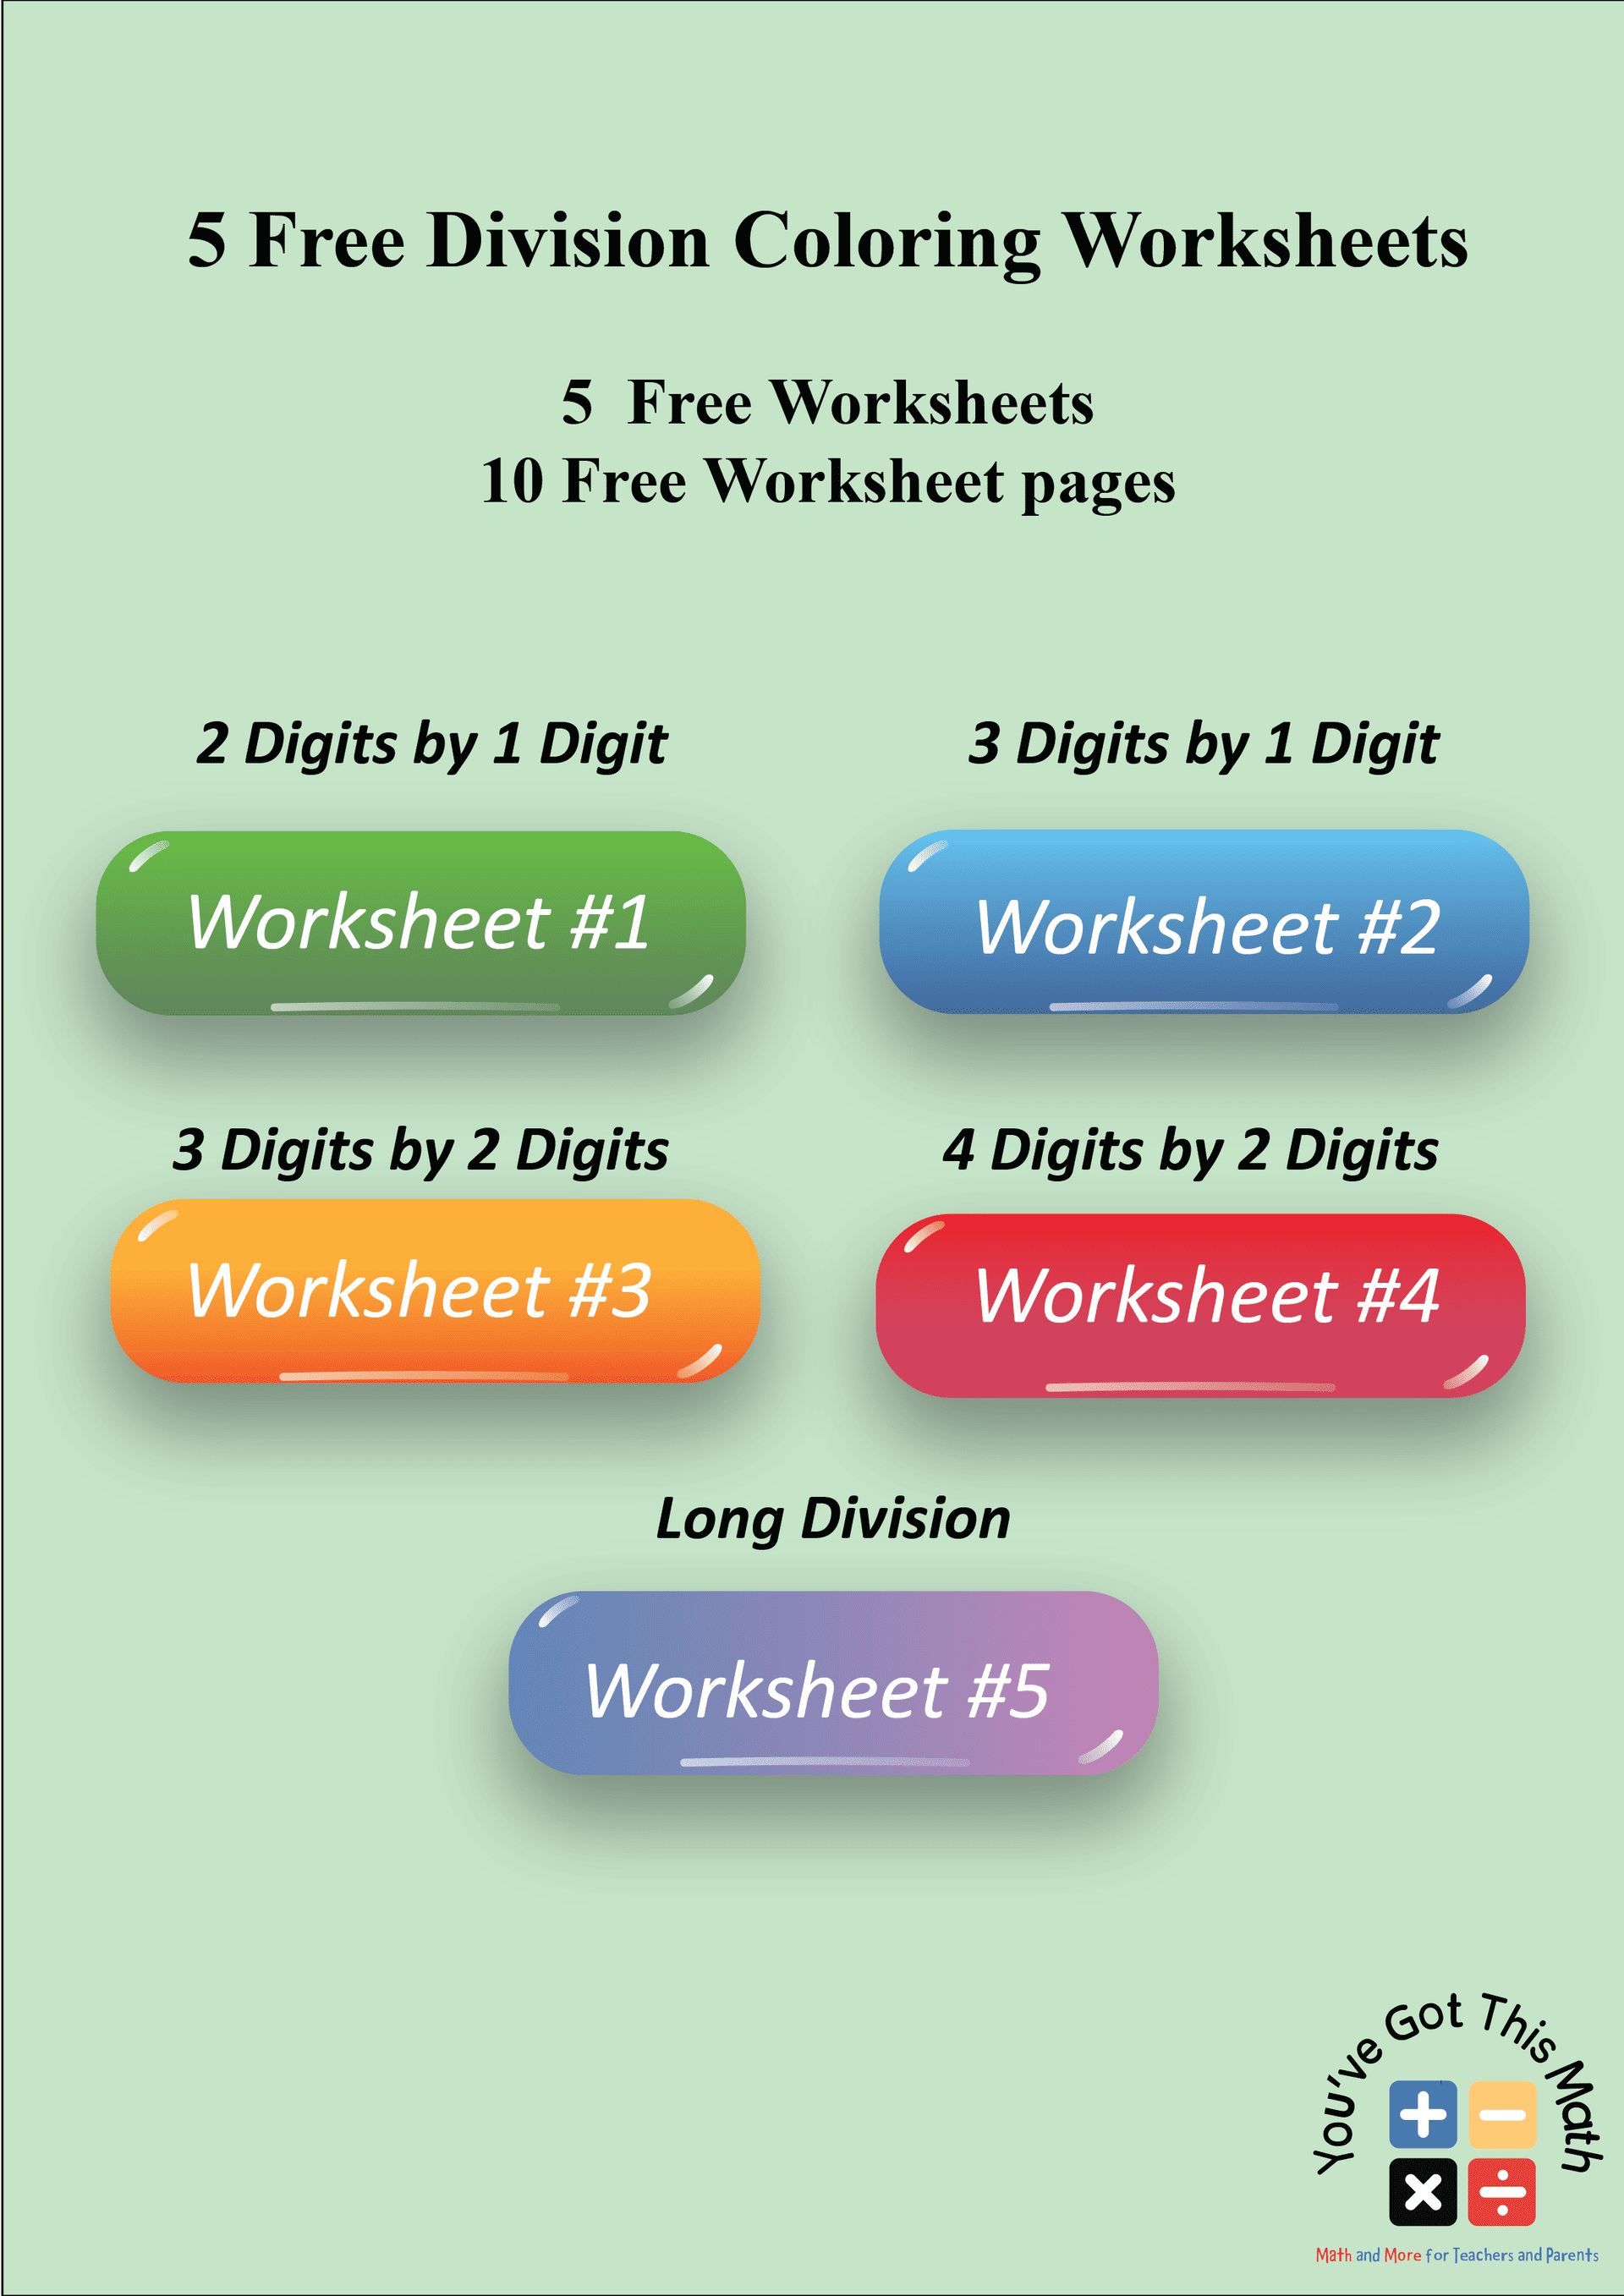 Division Coloring Worksheets